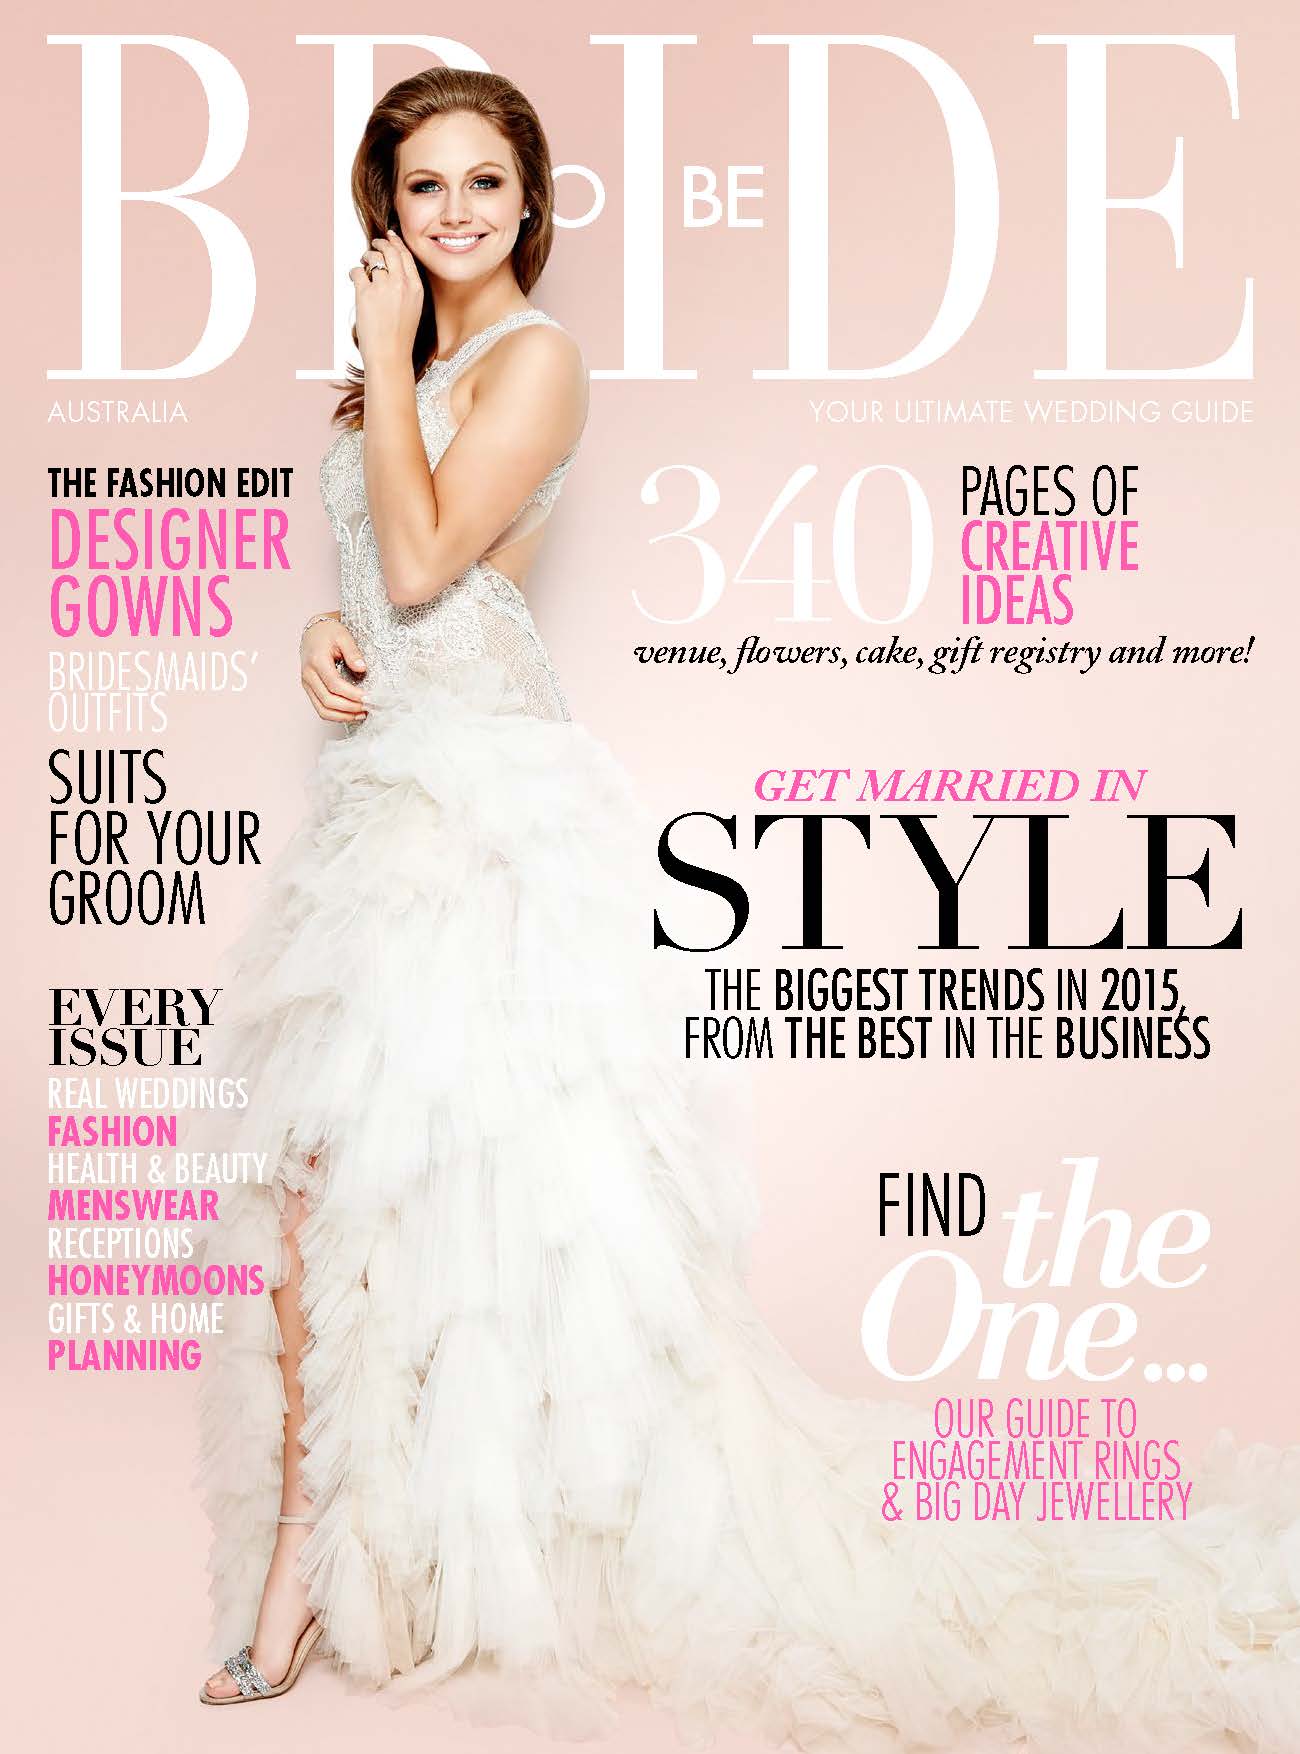 Bride to Be Magazine.jpg